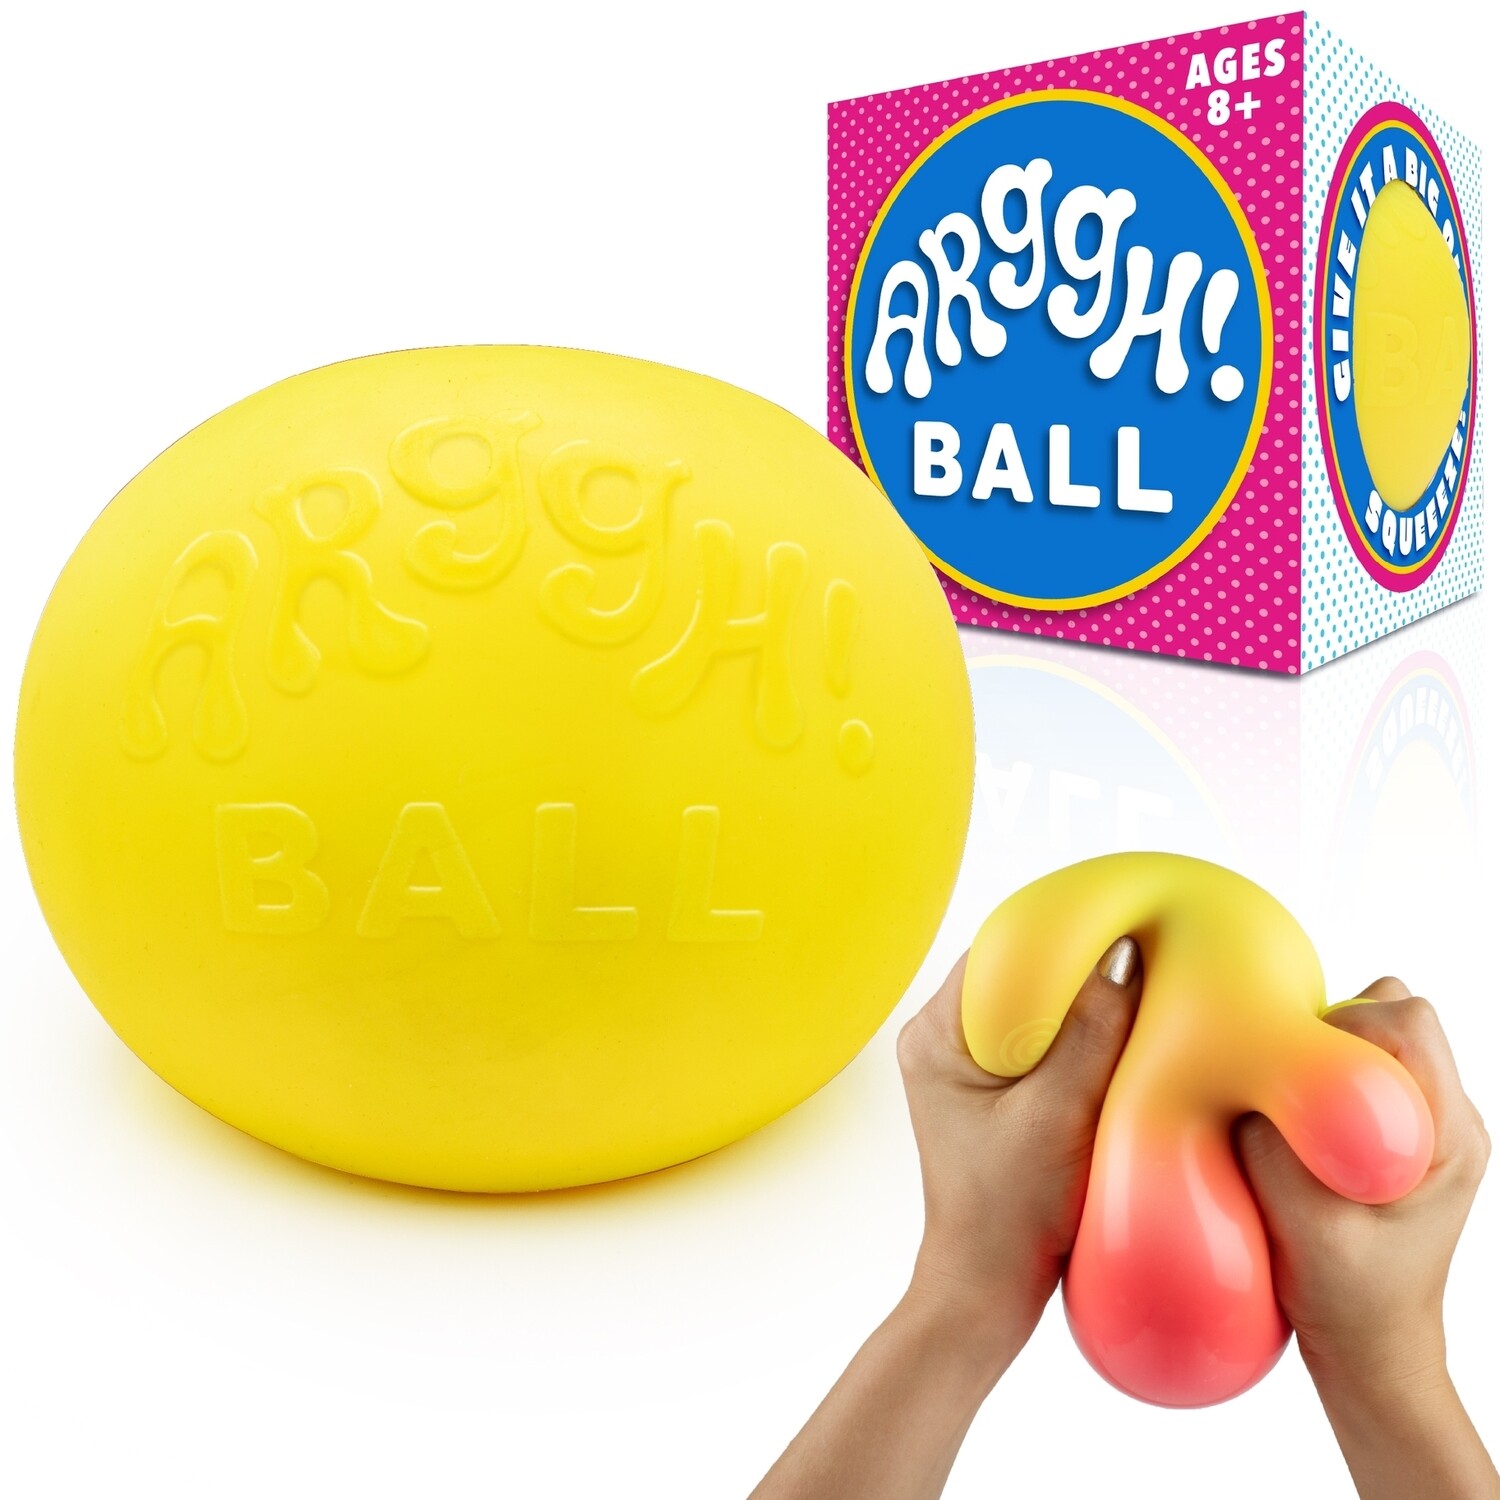 Giant yellow Arggh Ball